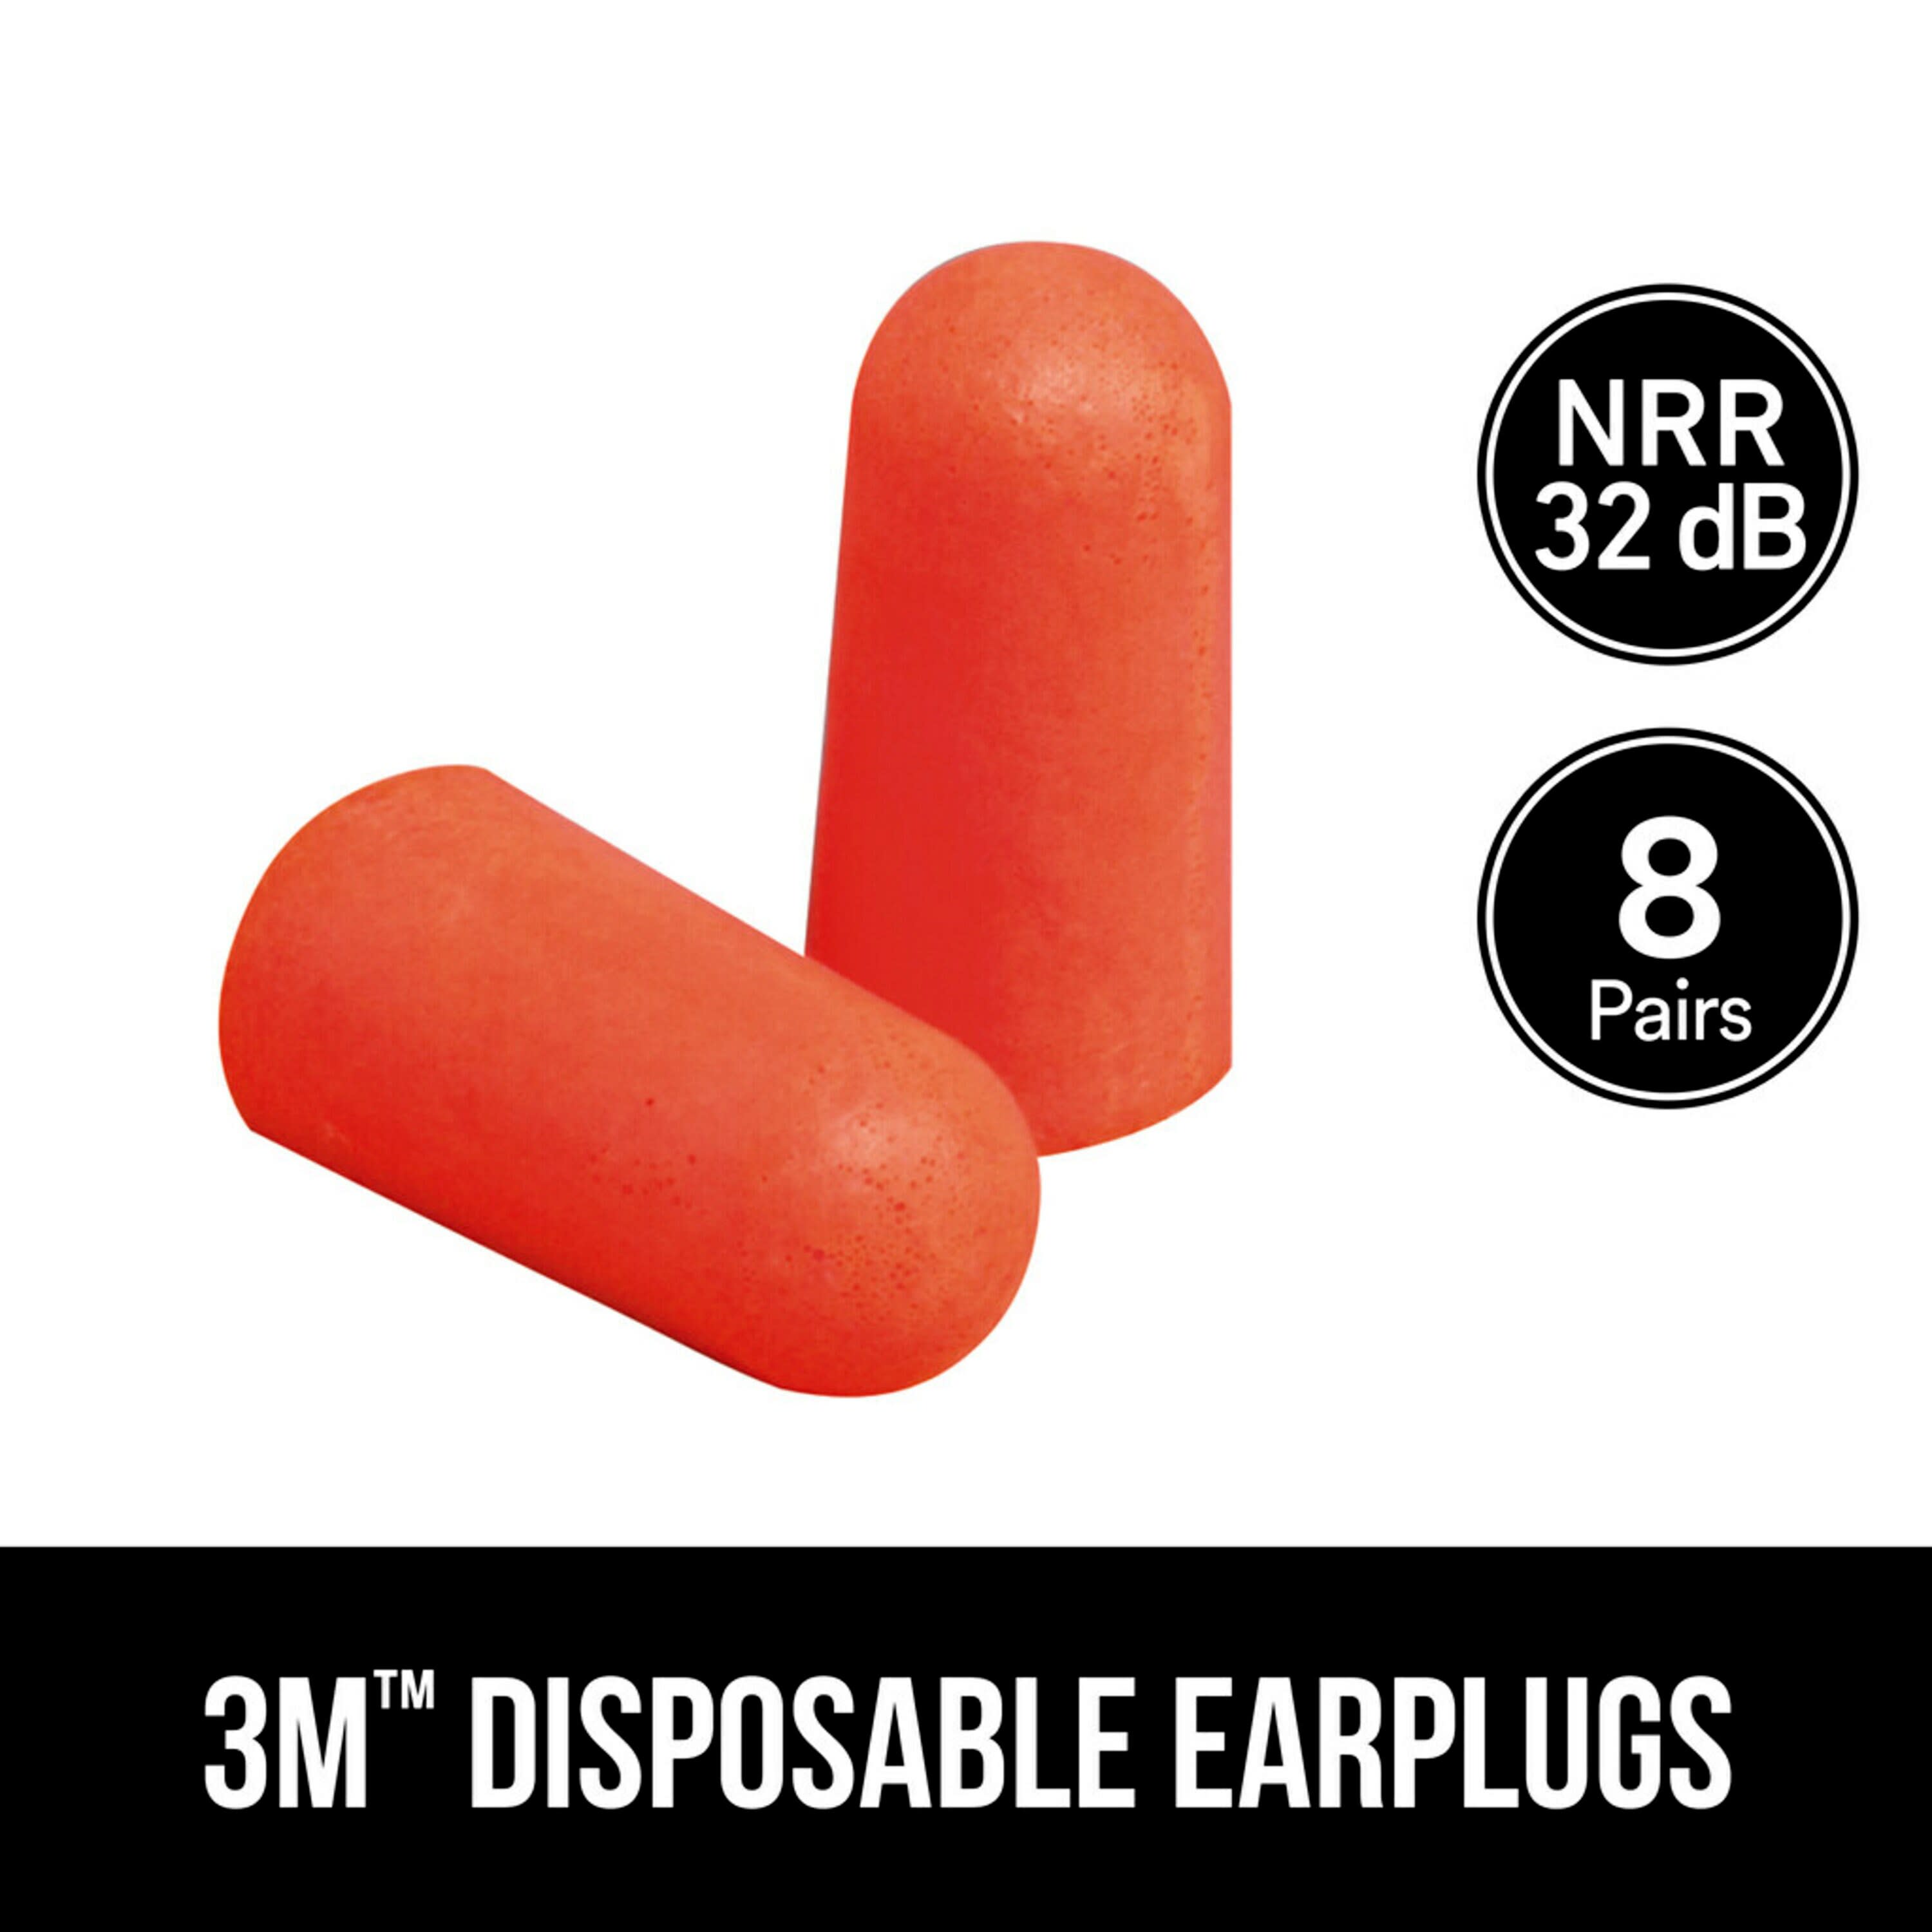 3M Soft Foam Disposable Ear Plugs, Orange, 92077H8-DC, 32 Db, 8 Pair - image 2 of 5